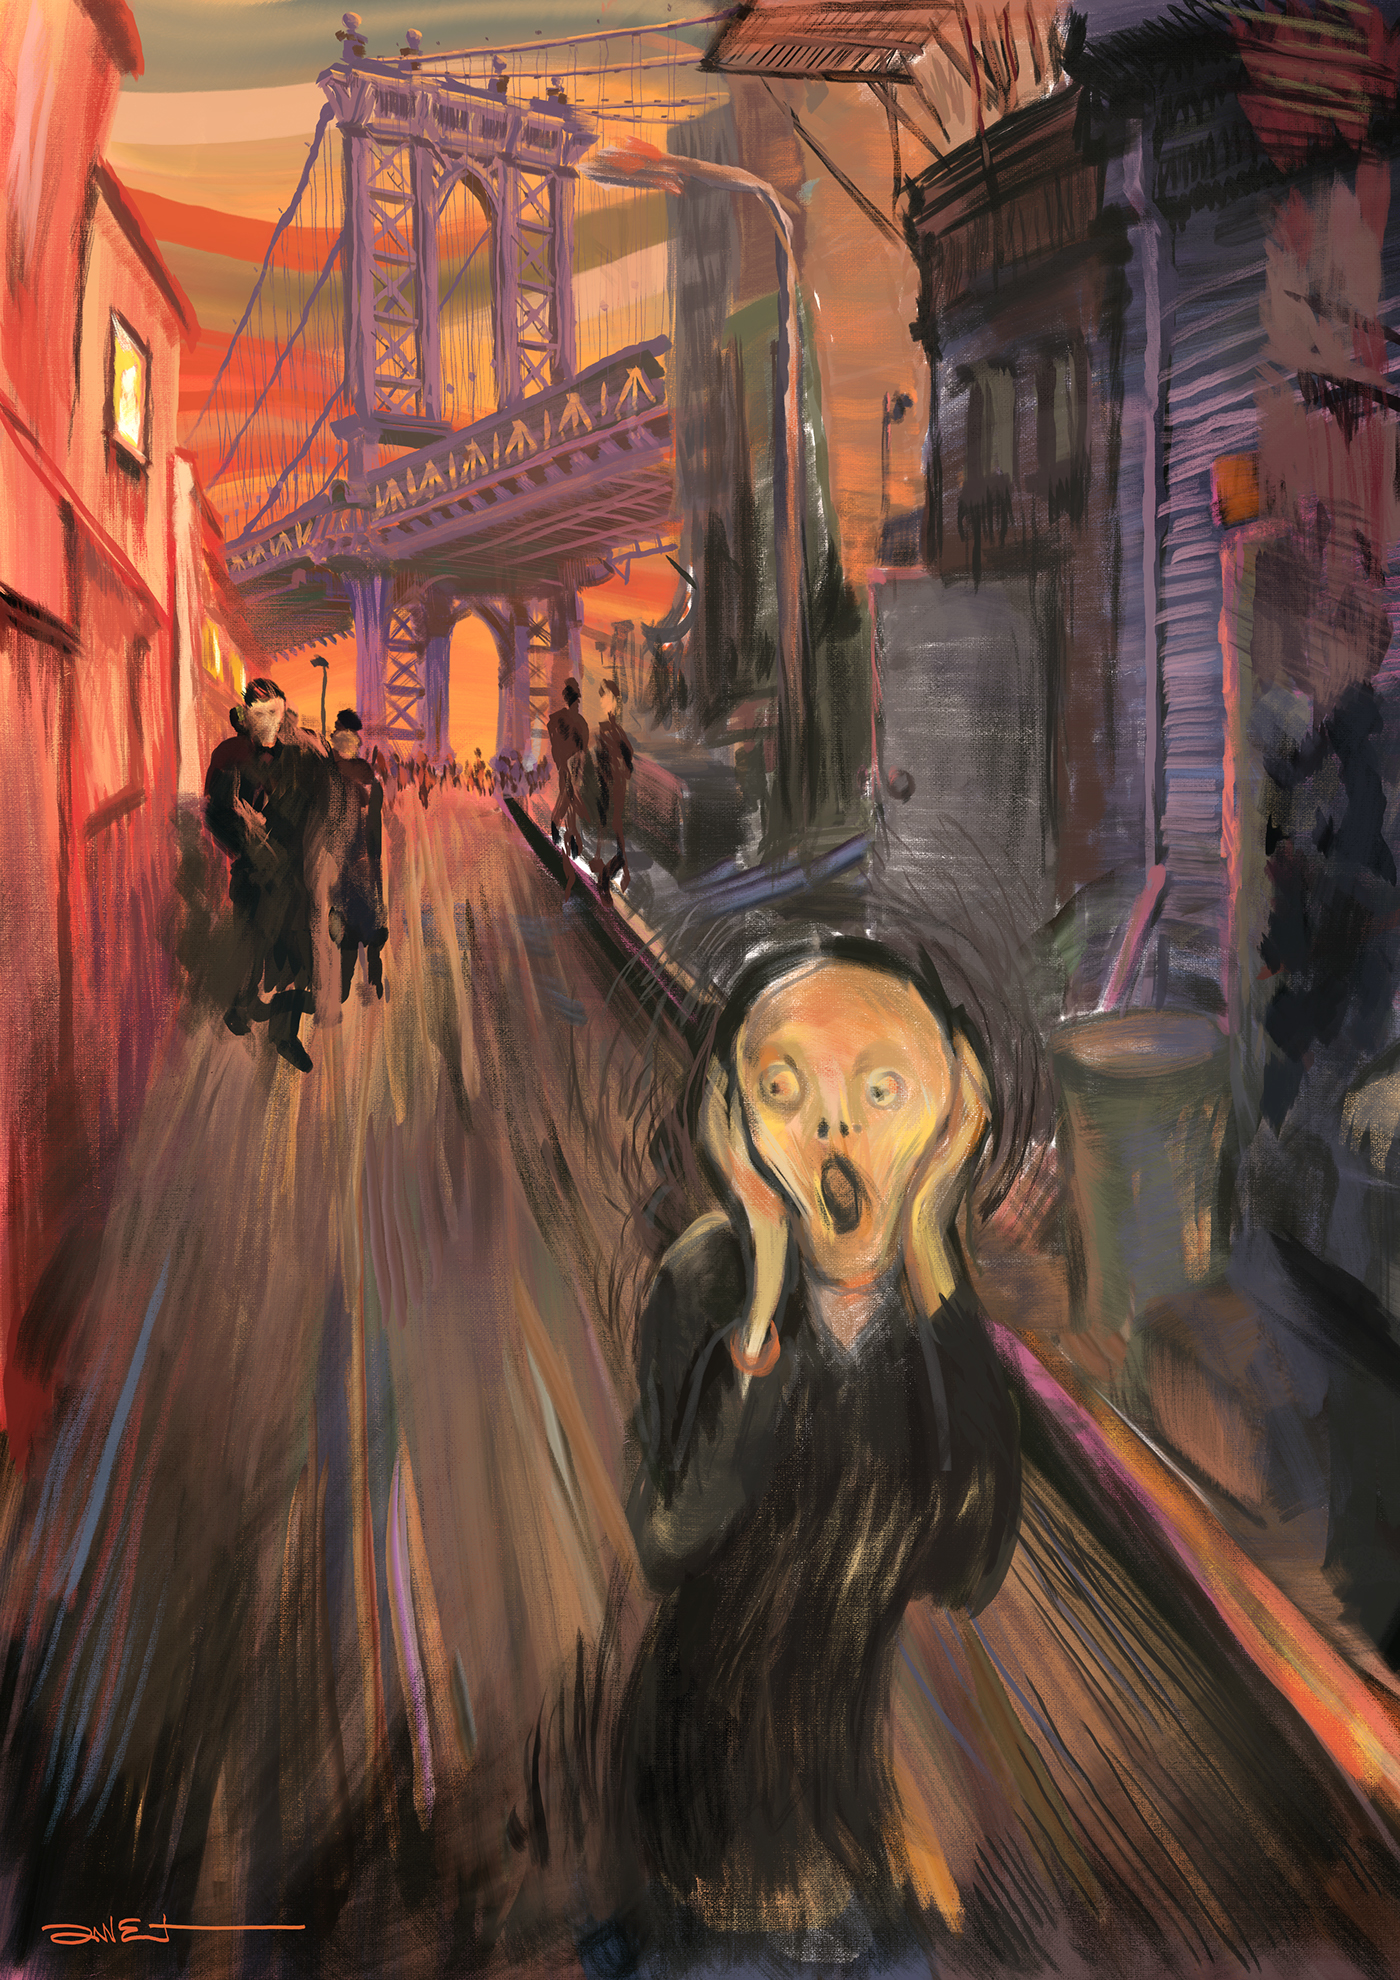 MunchContest munch scream Edvard Munch digital illustration digital painting Oil Painting fine art